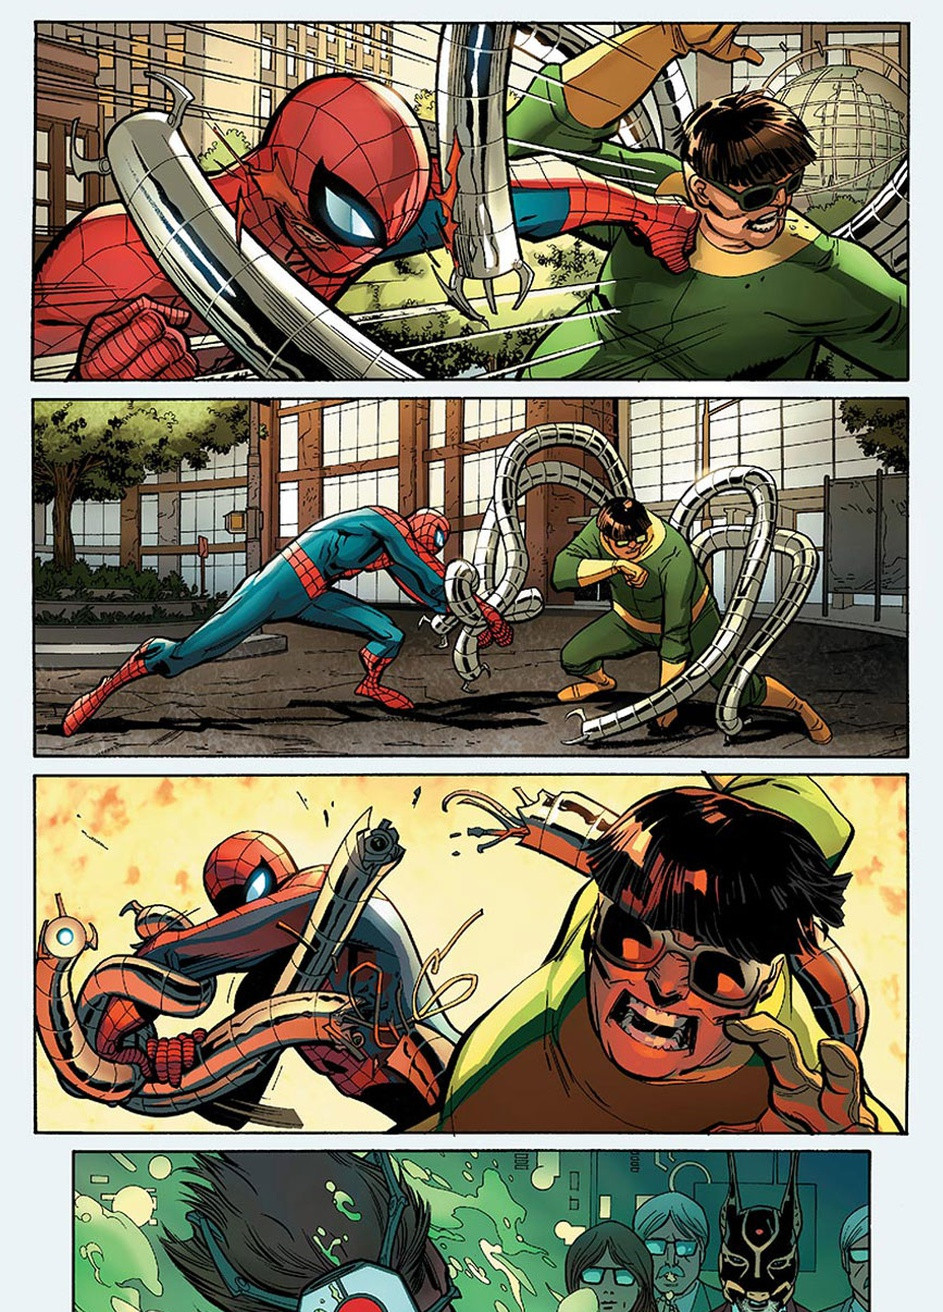 Комікс Marvel Comics № 20. Spider-Man No Brand (257038578)